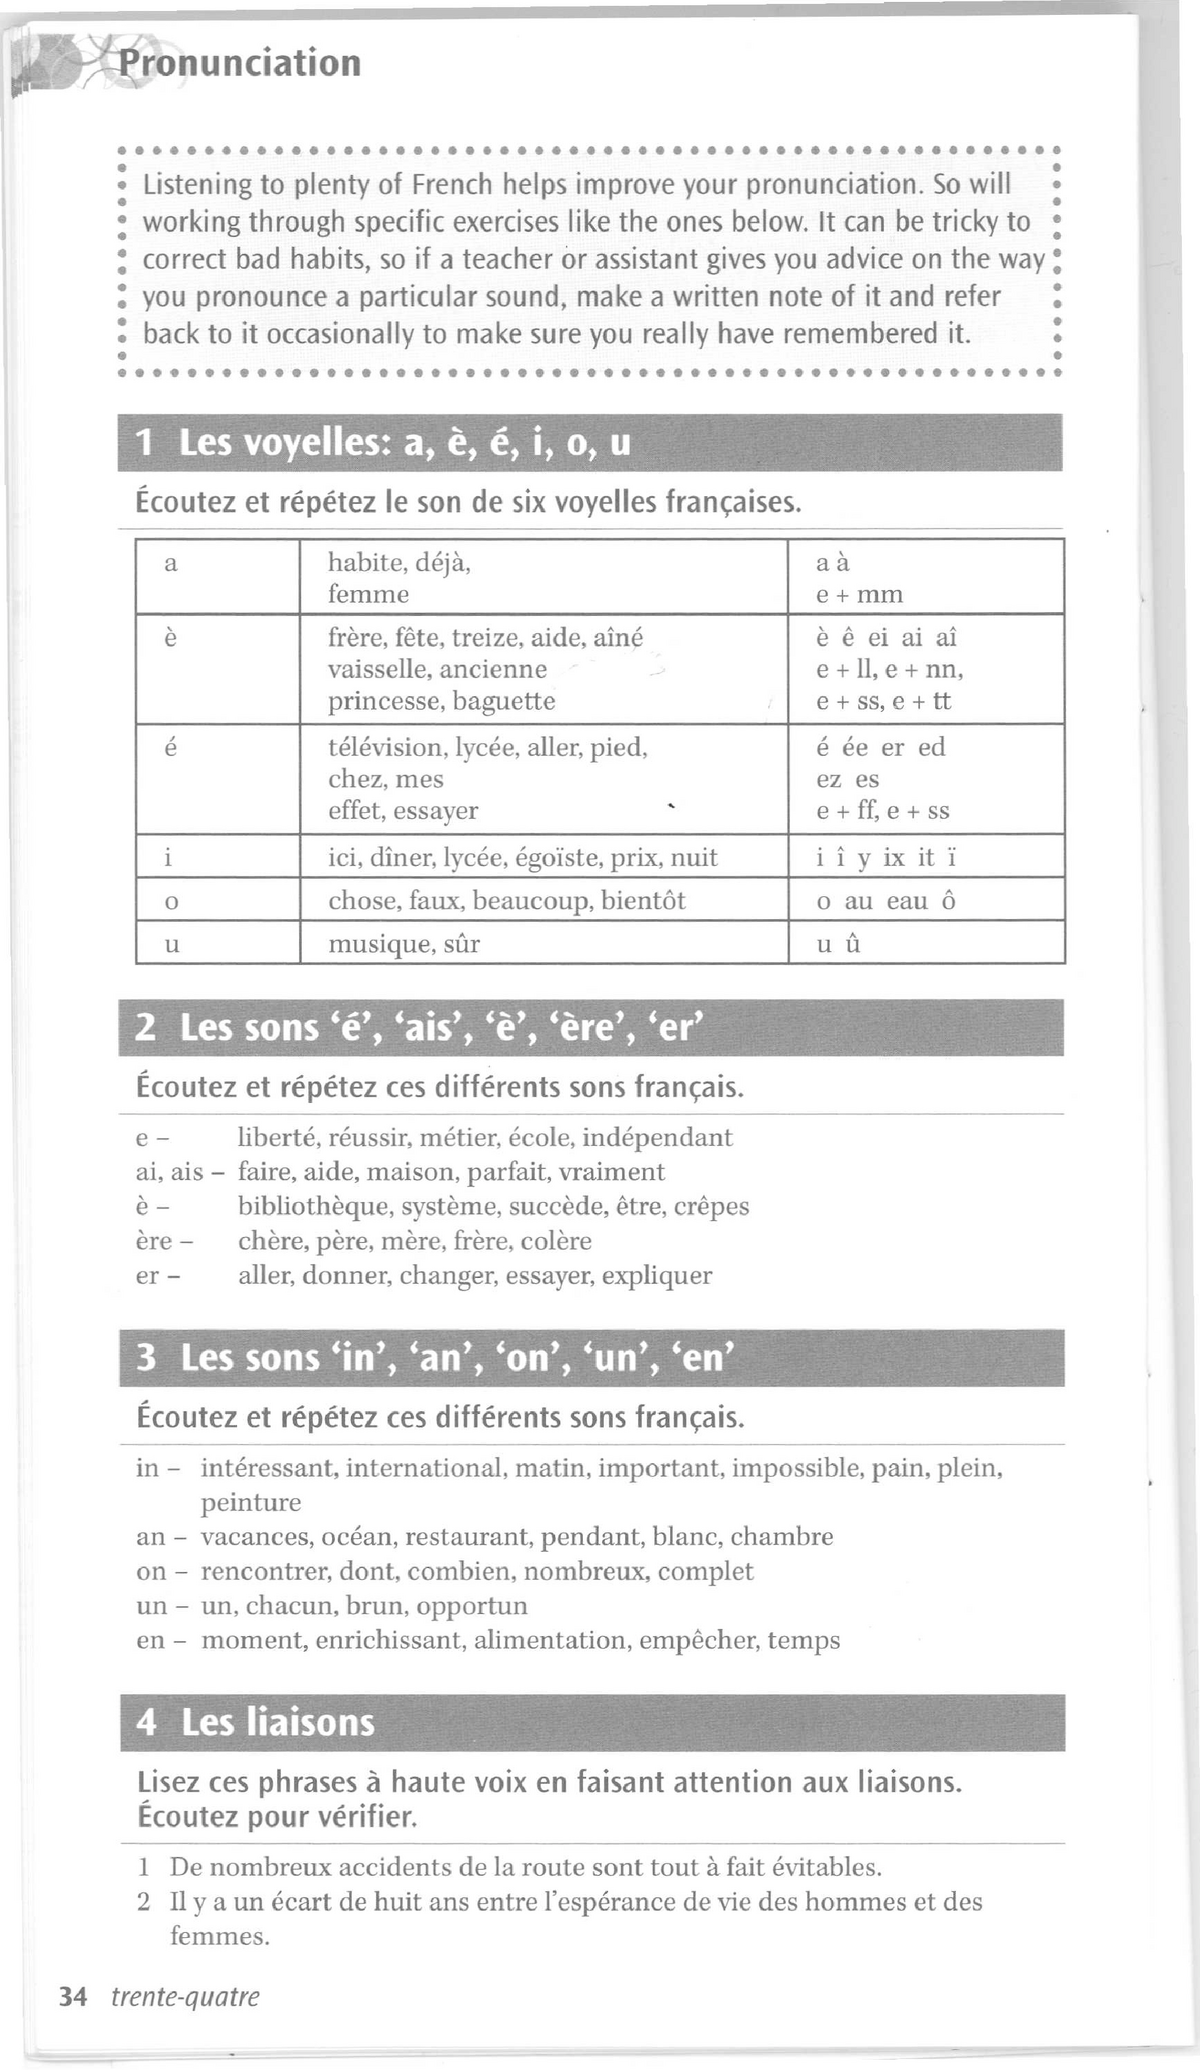 French Pronunciation Guide 0001 Studocu